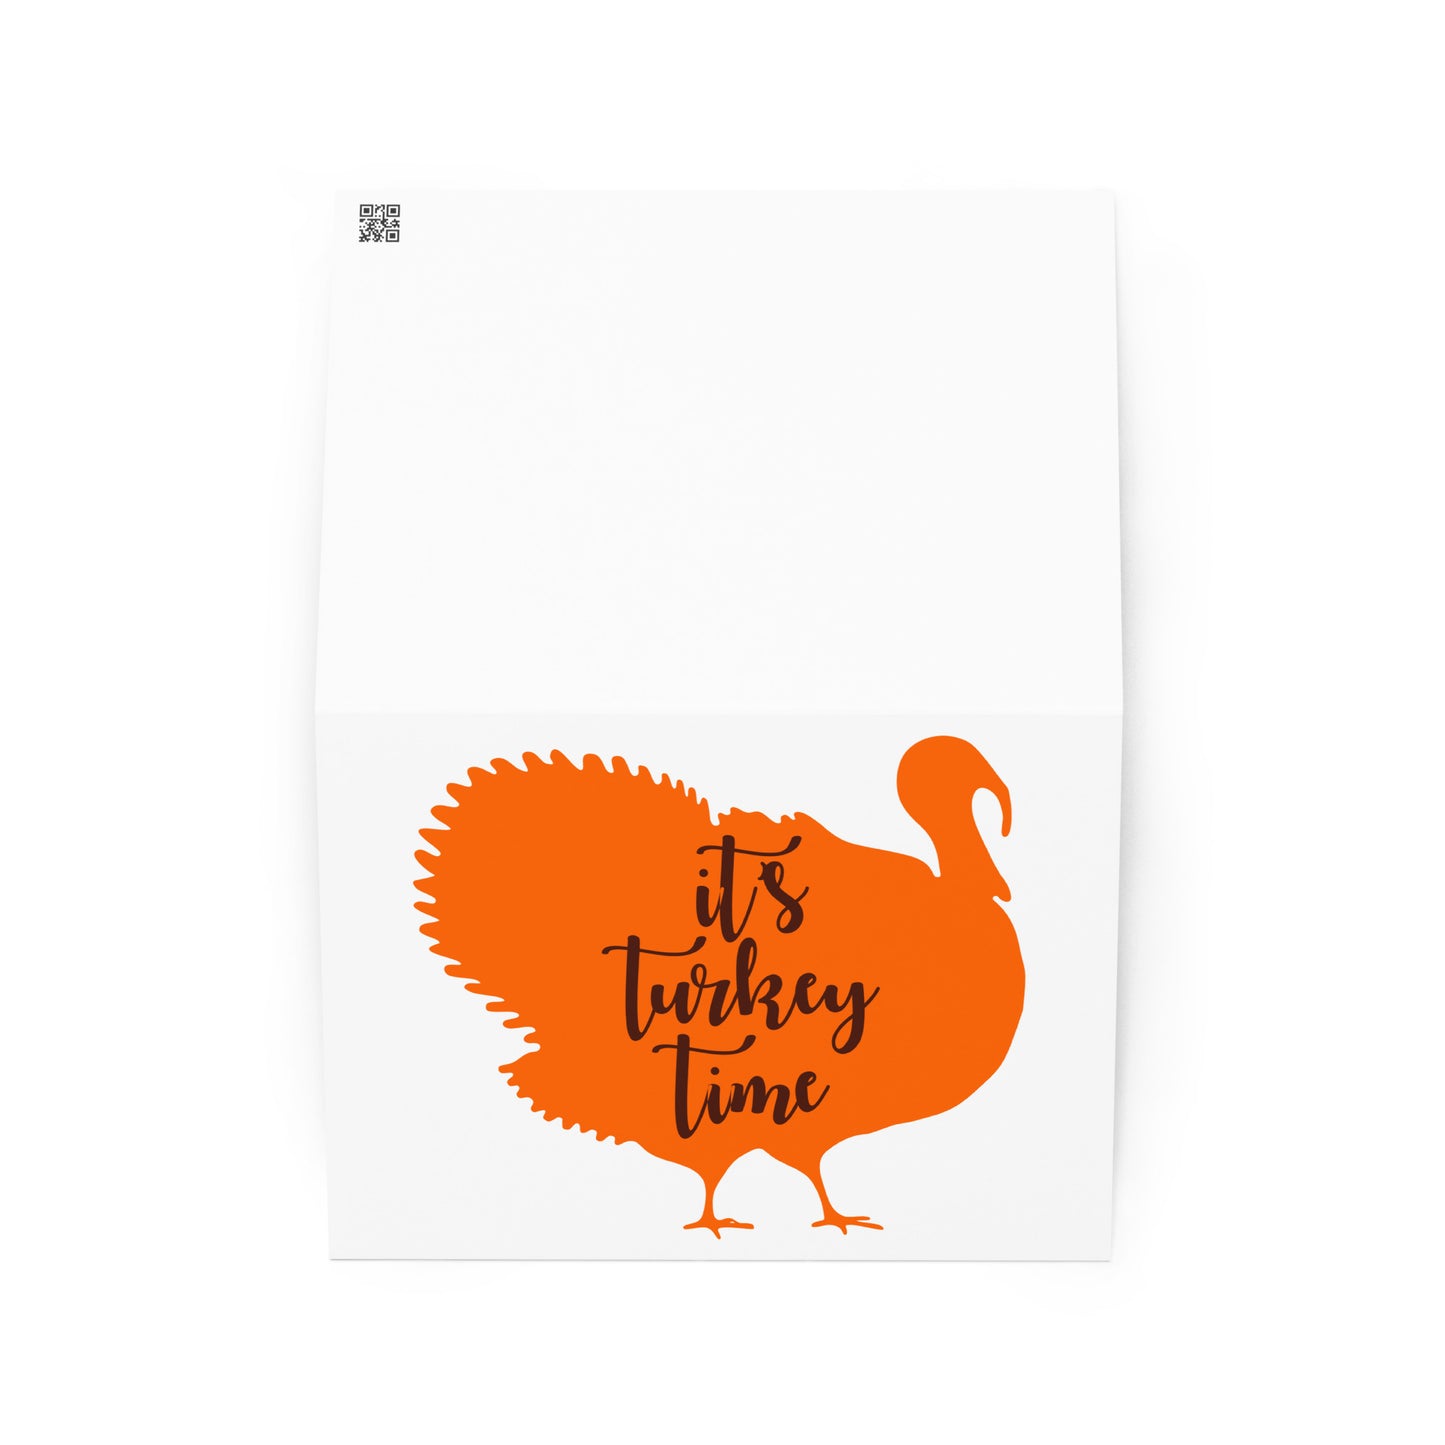 It's Turkey Time Greeting card